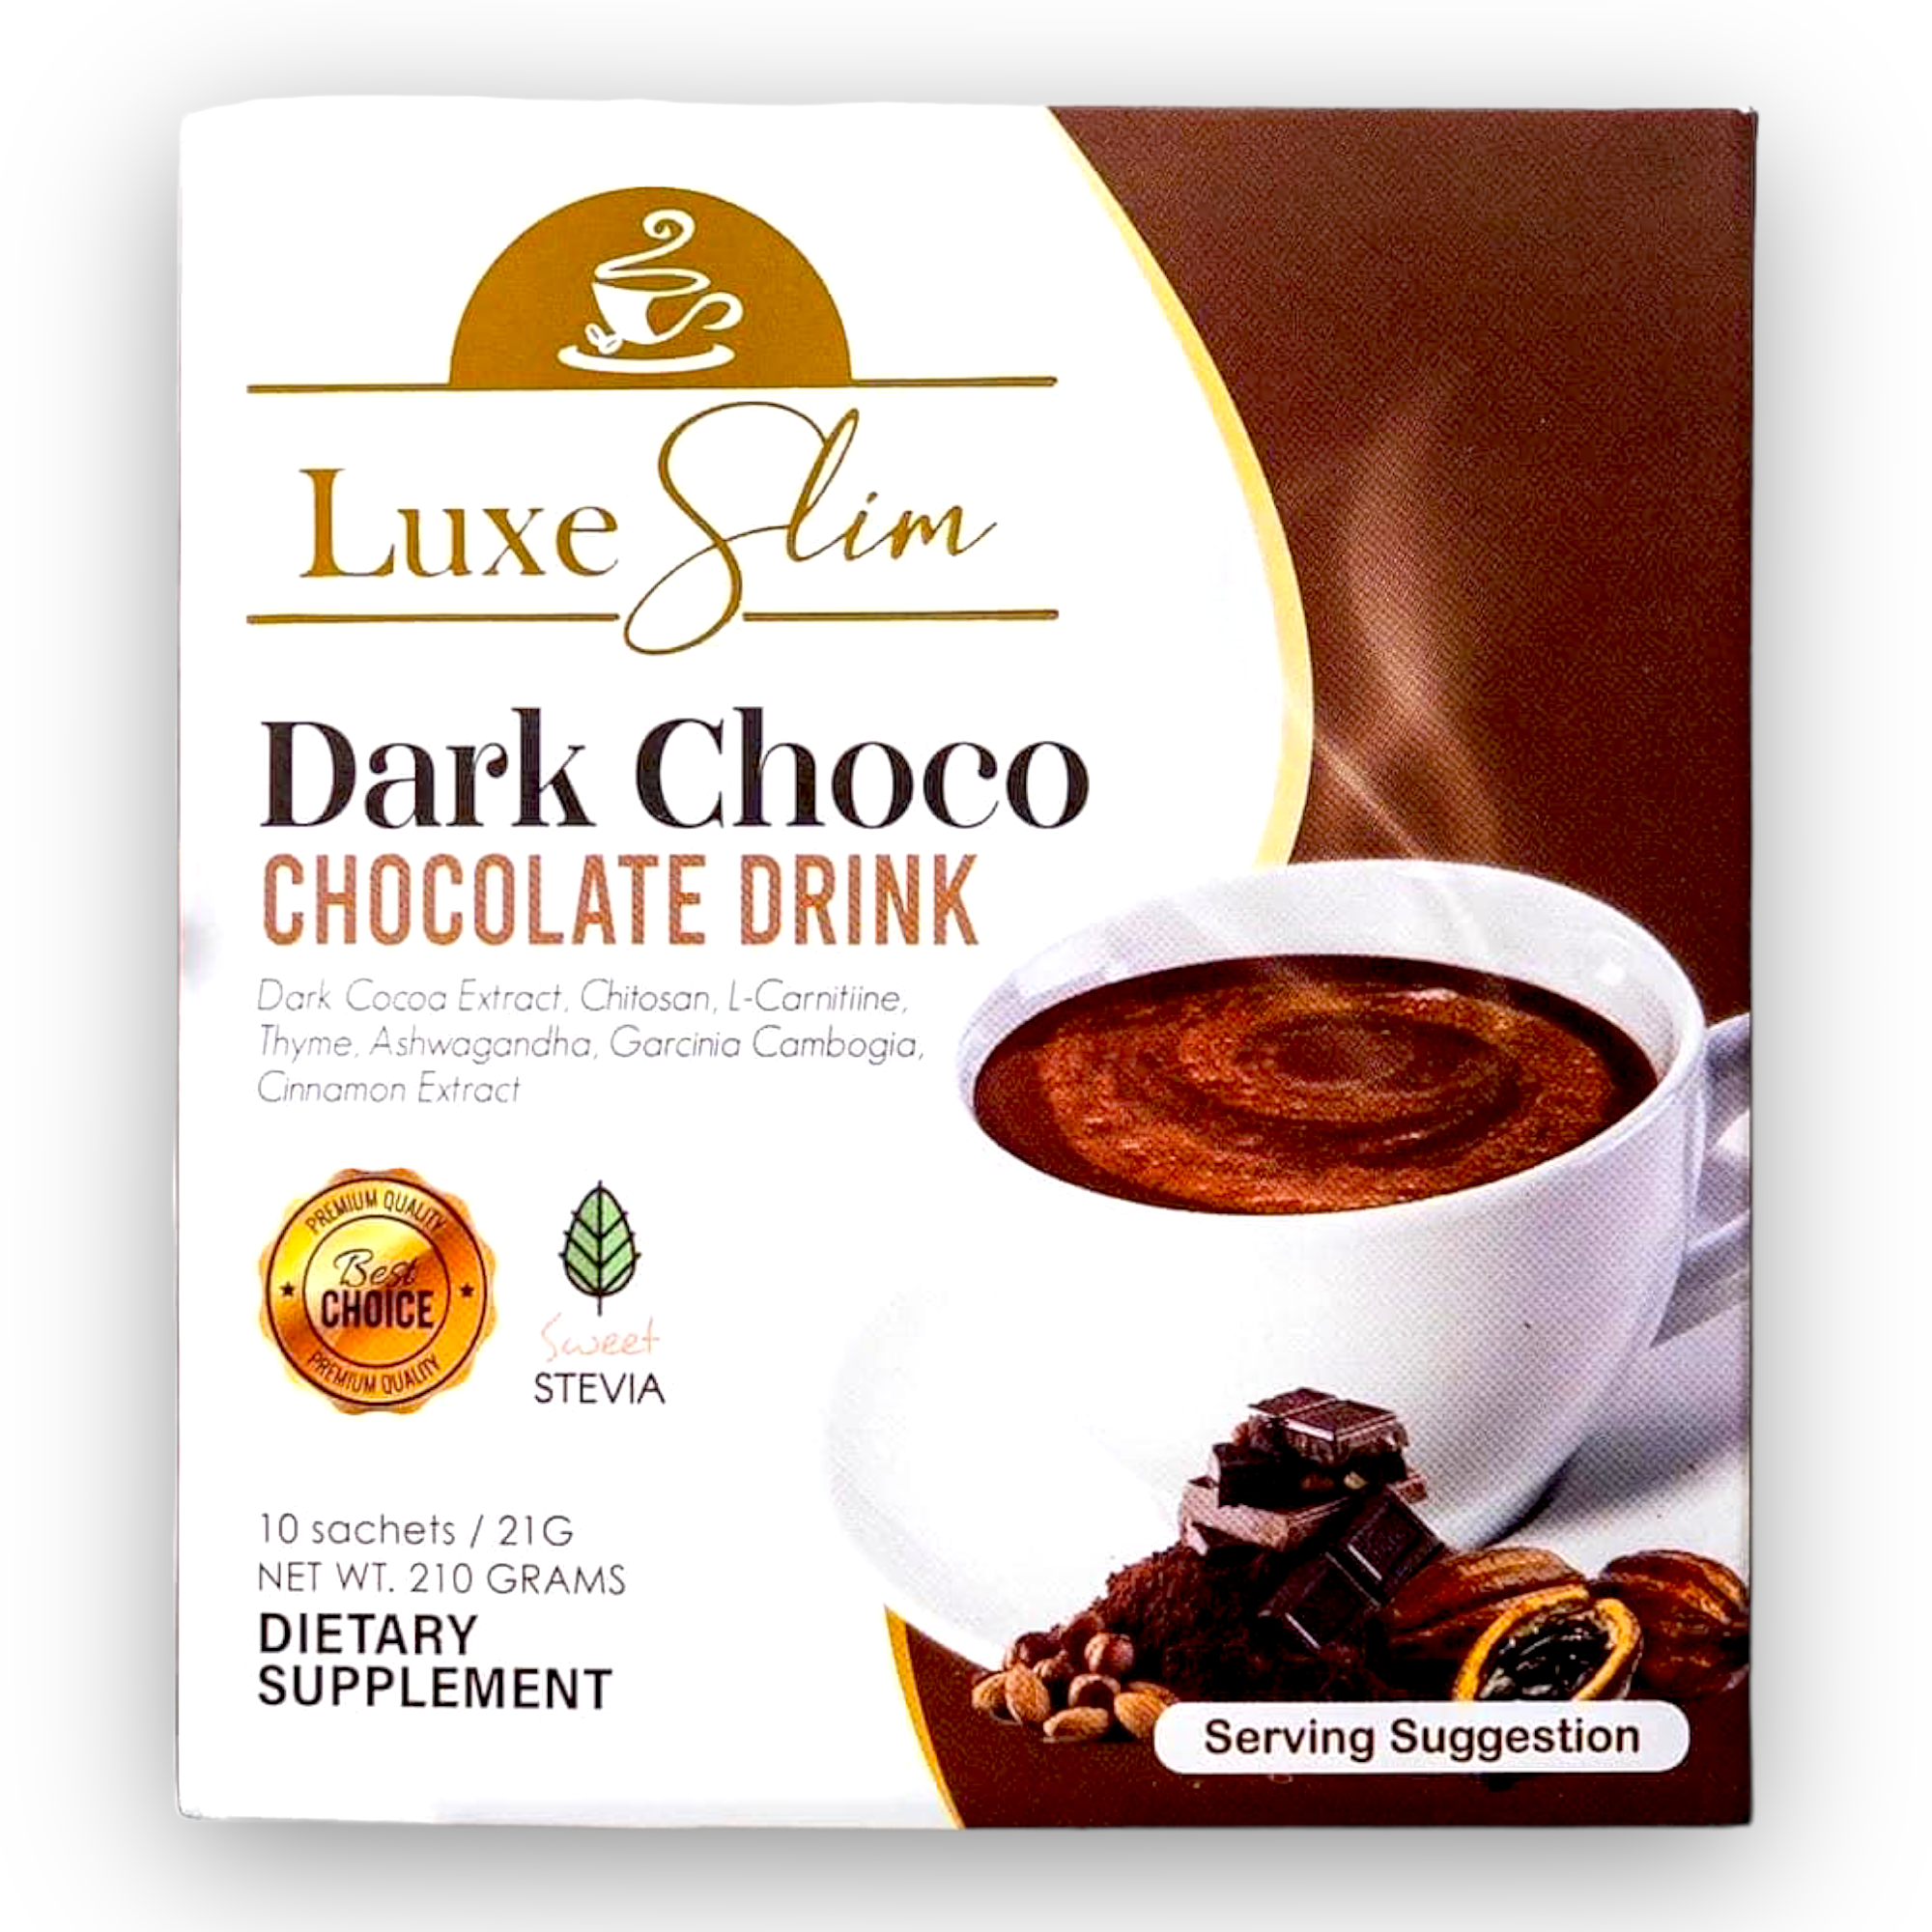 Luxe Slim - Dark Choco - Chocolate Drink 21g x 10